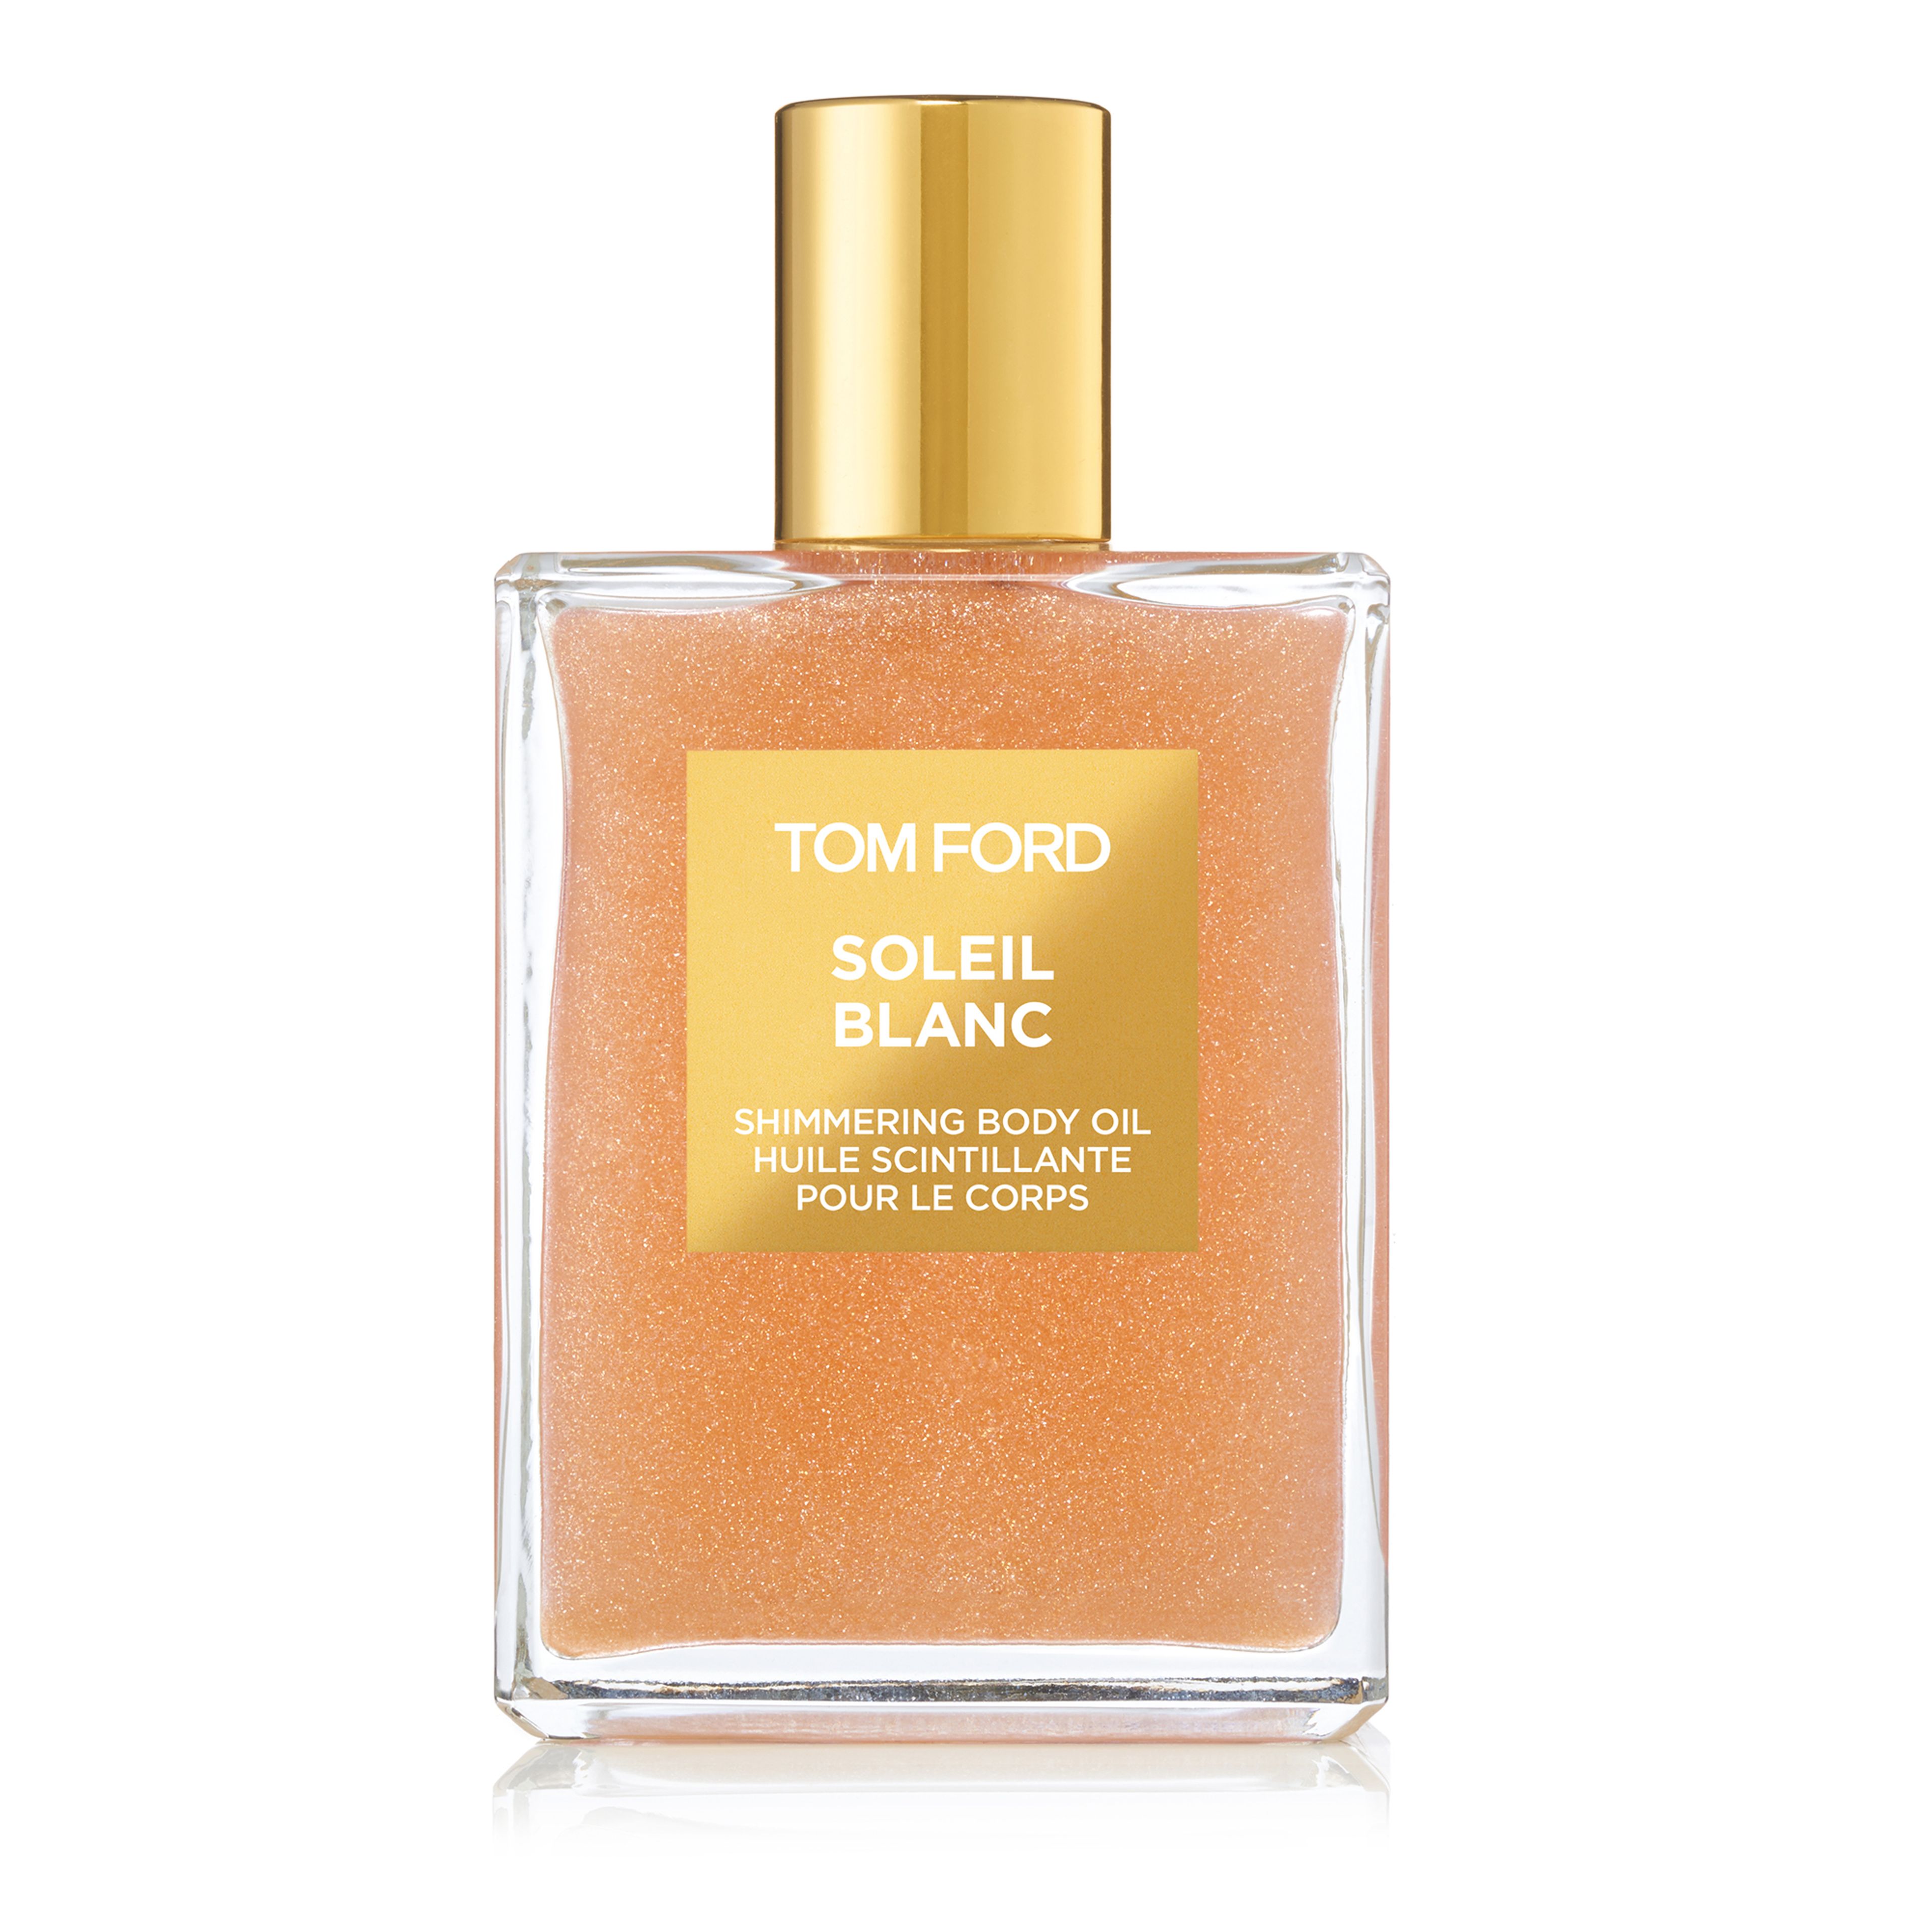 Tom Ford Soleil Blanc Shimmering Body Oil

shade: Rose Gold 6